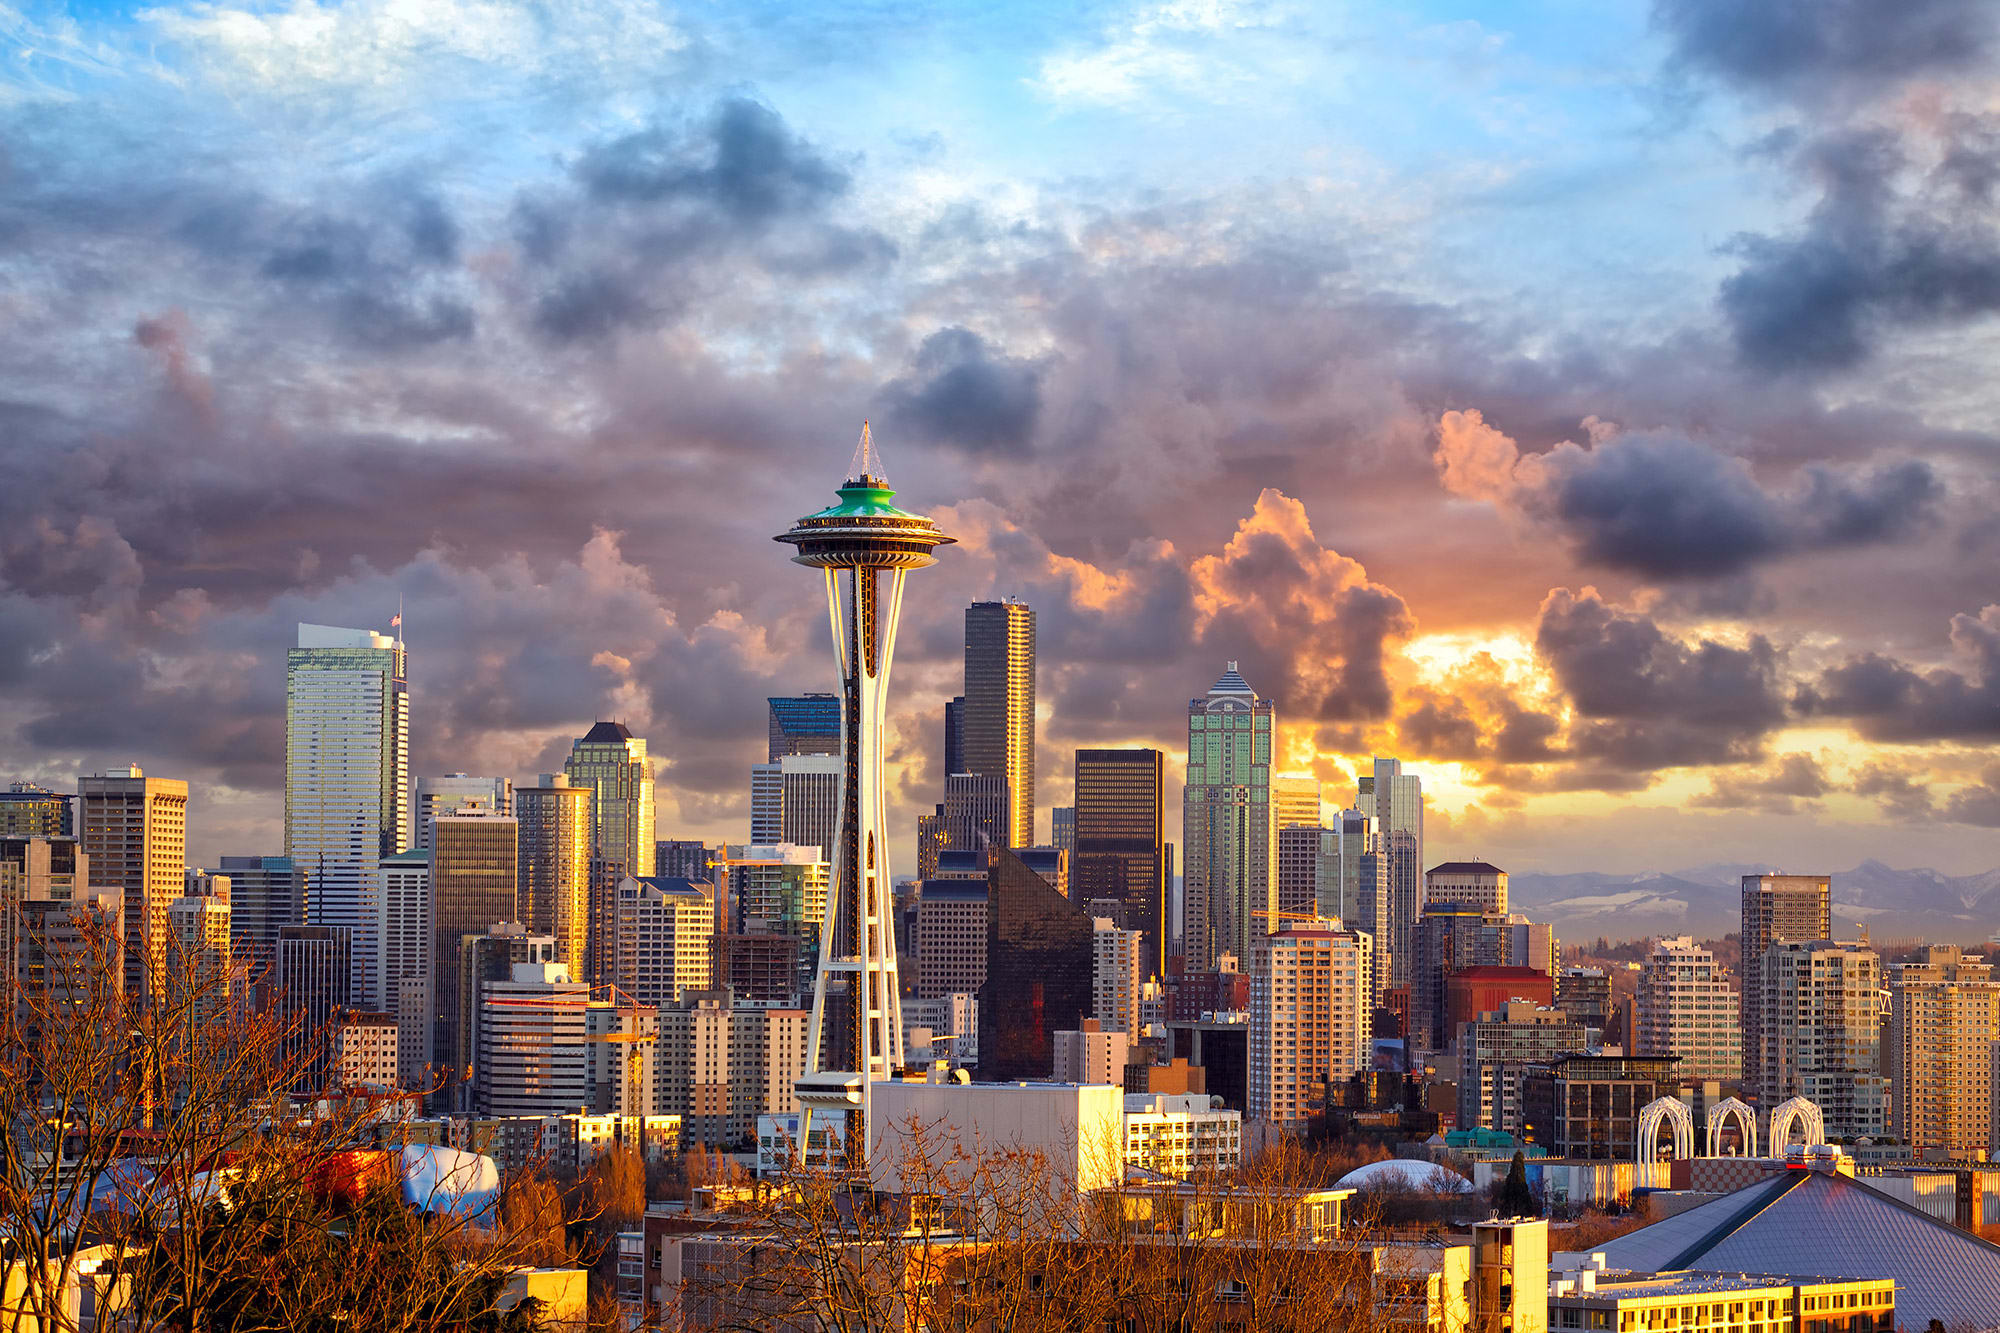 Seattle Washington skyline